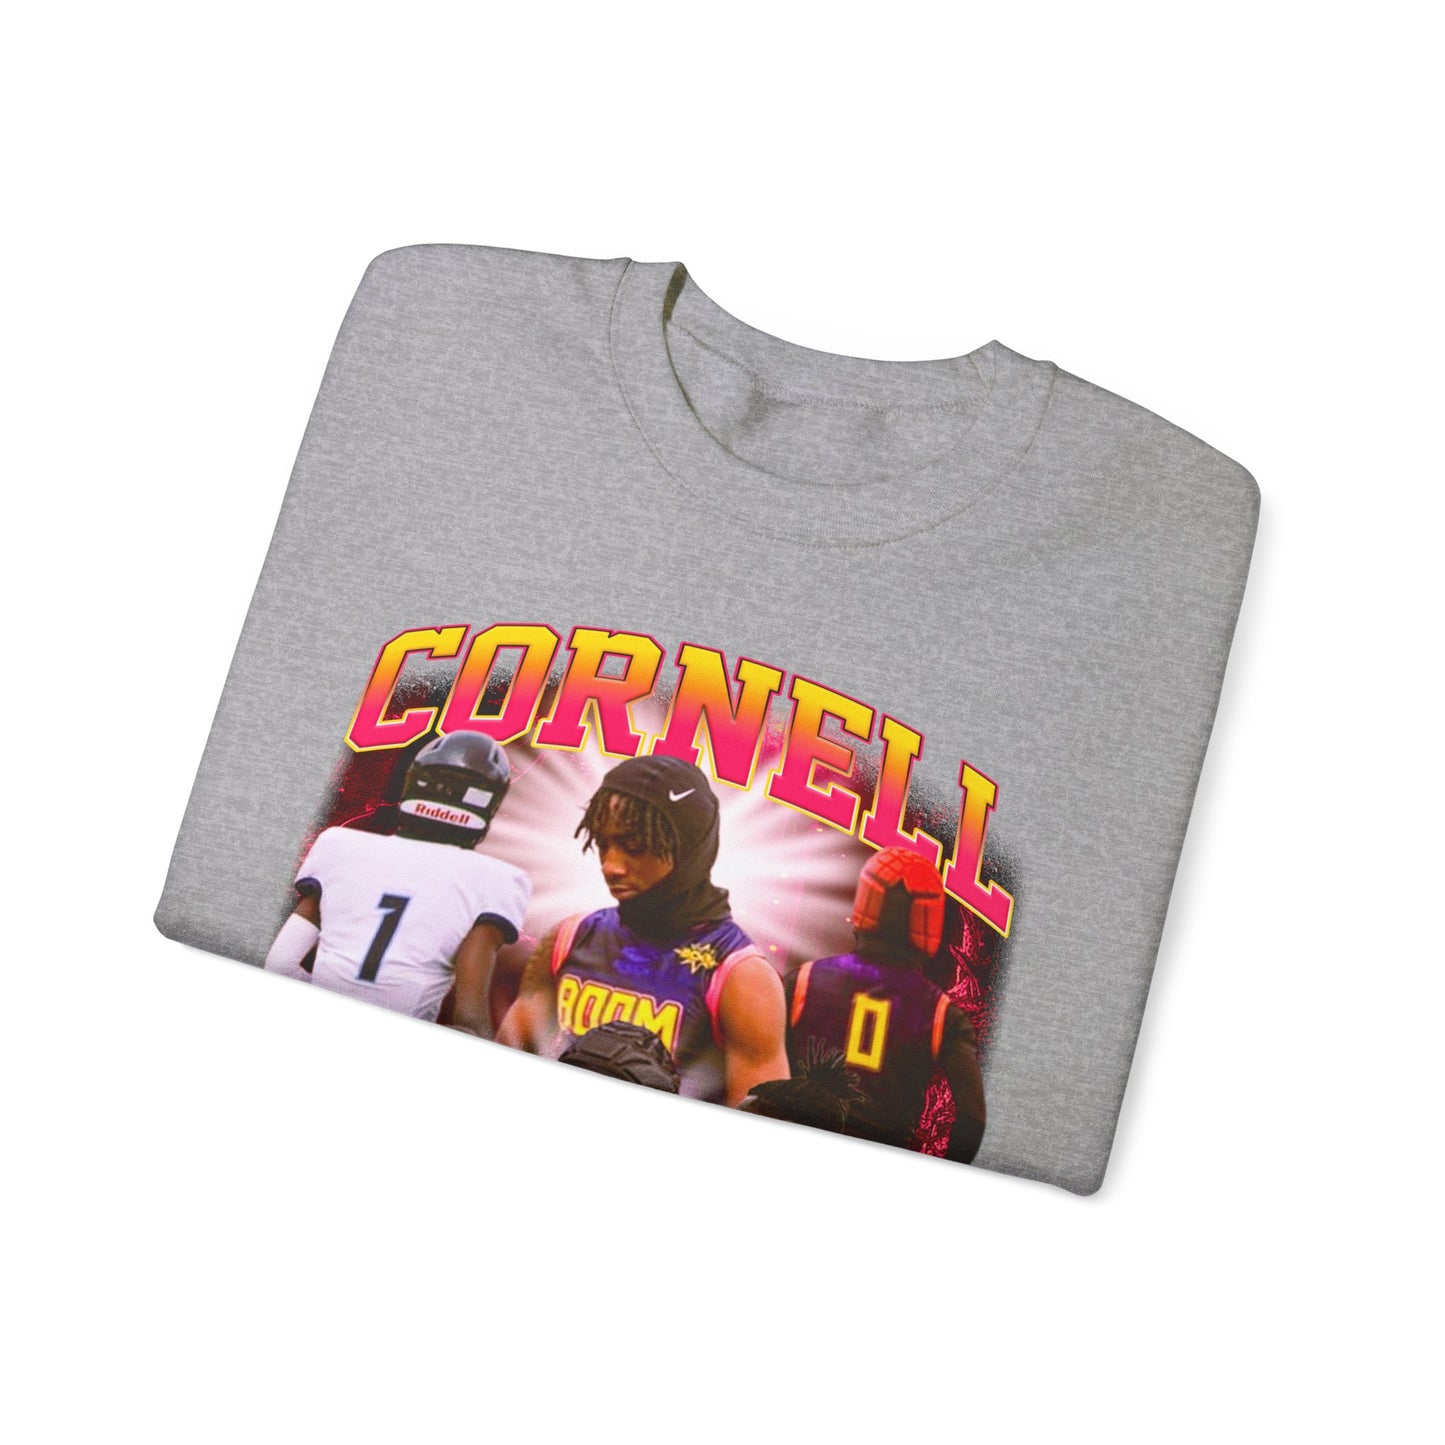 Cornell Conely Crewneck Sweatshirt